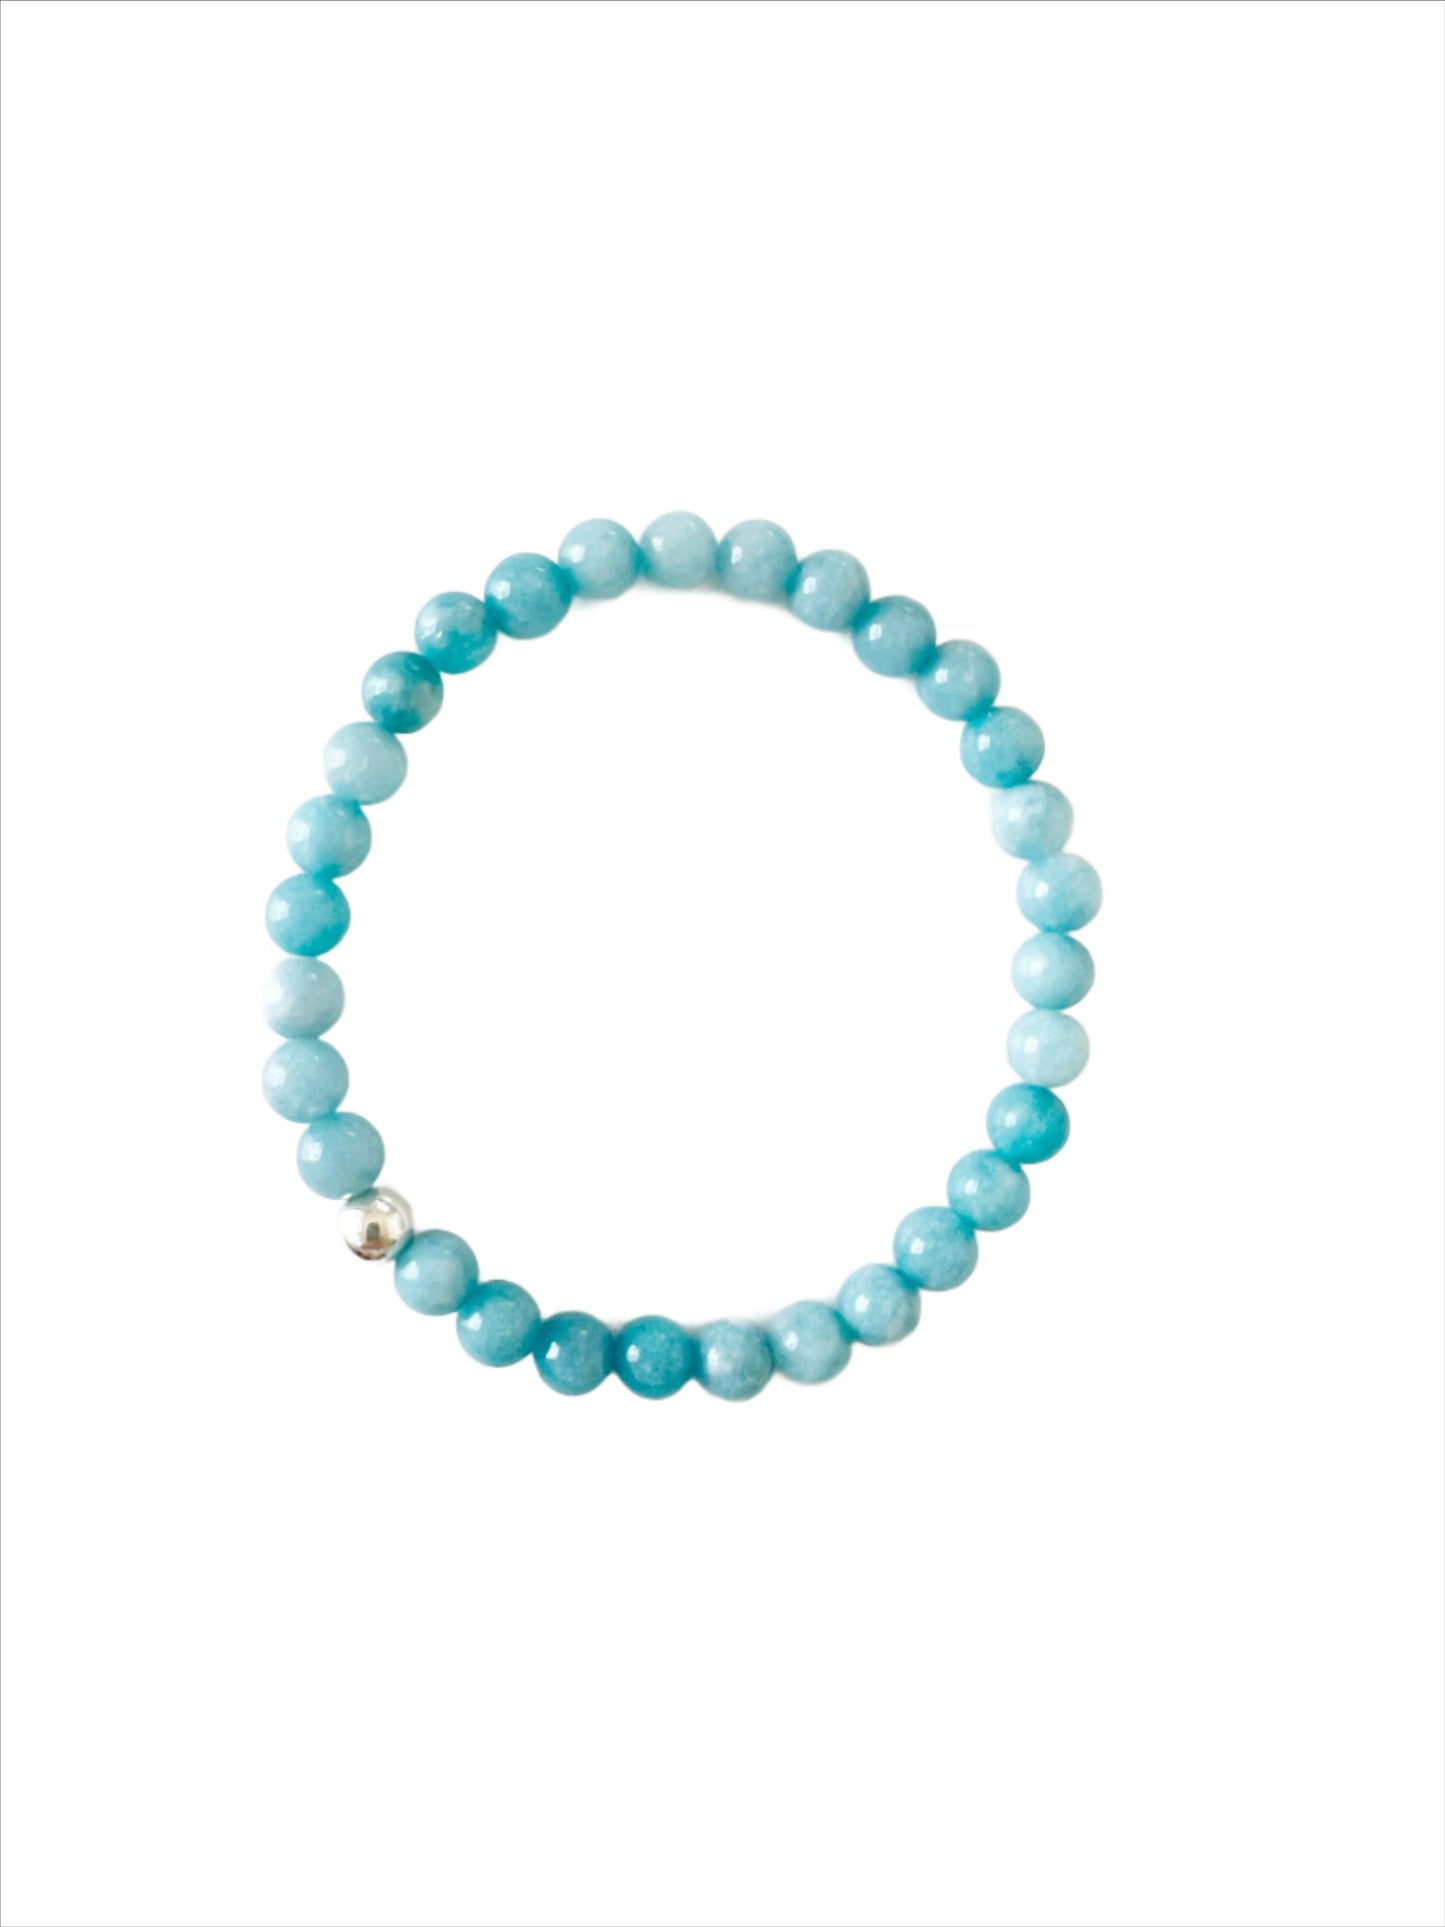 Minimalist everyday Blue Chalcedony stretch bracelet with one Sterling Silver bead